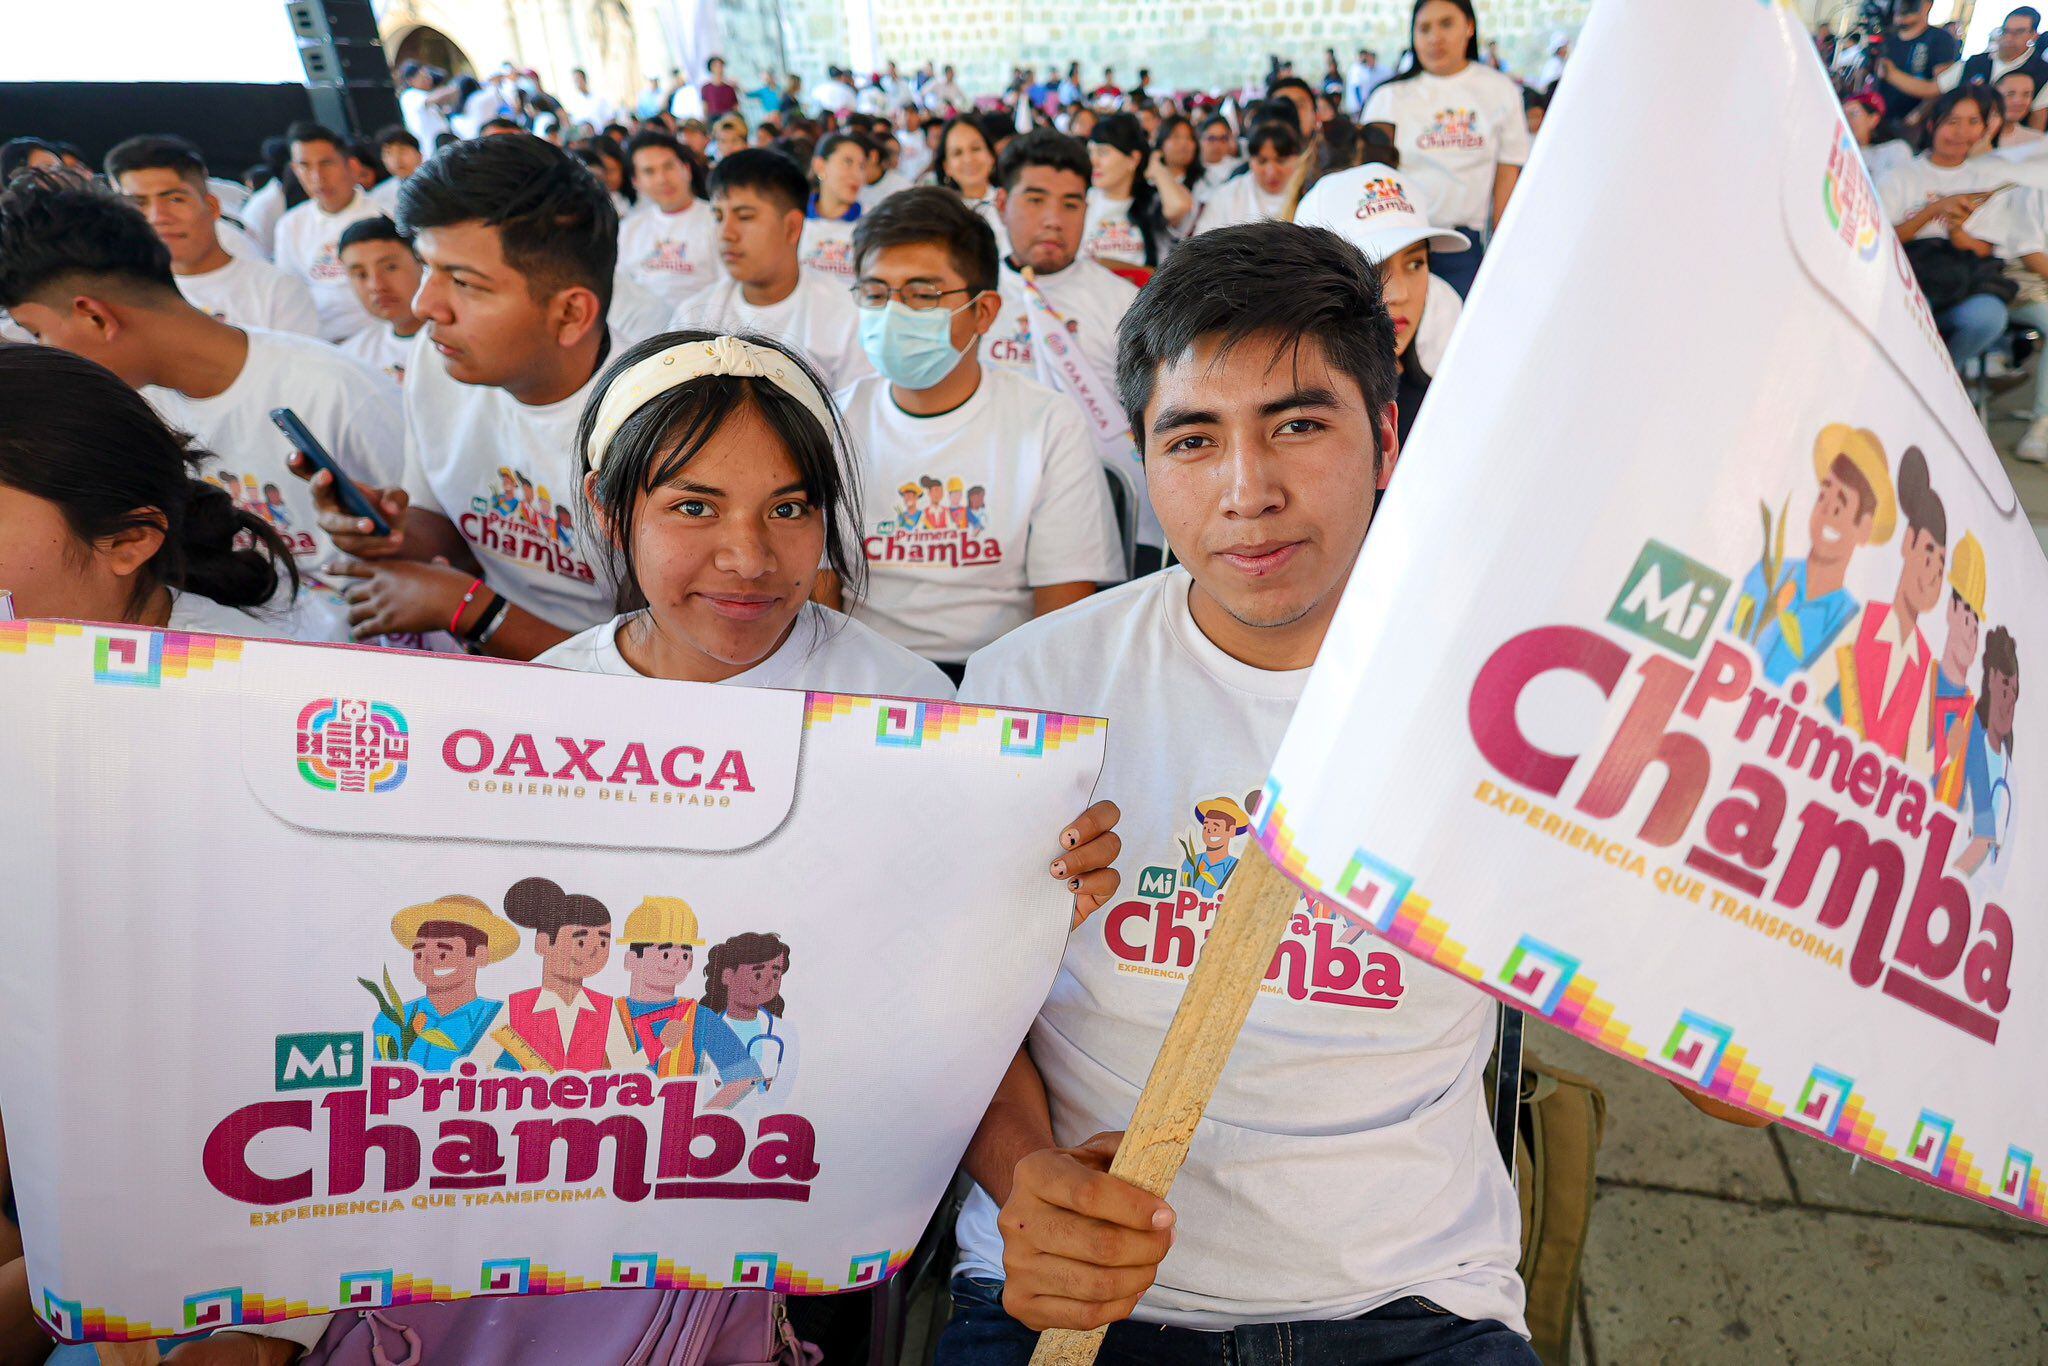 Mi primera chamba busca apoyar a jóvenes de Oaxaca. (X/@salomonj)